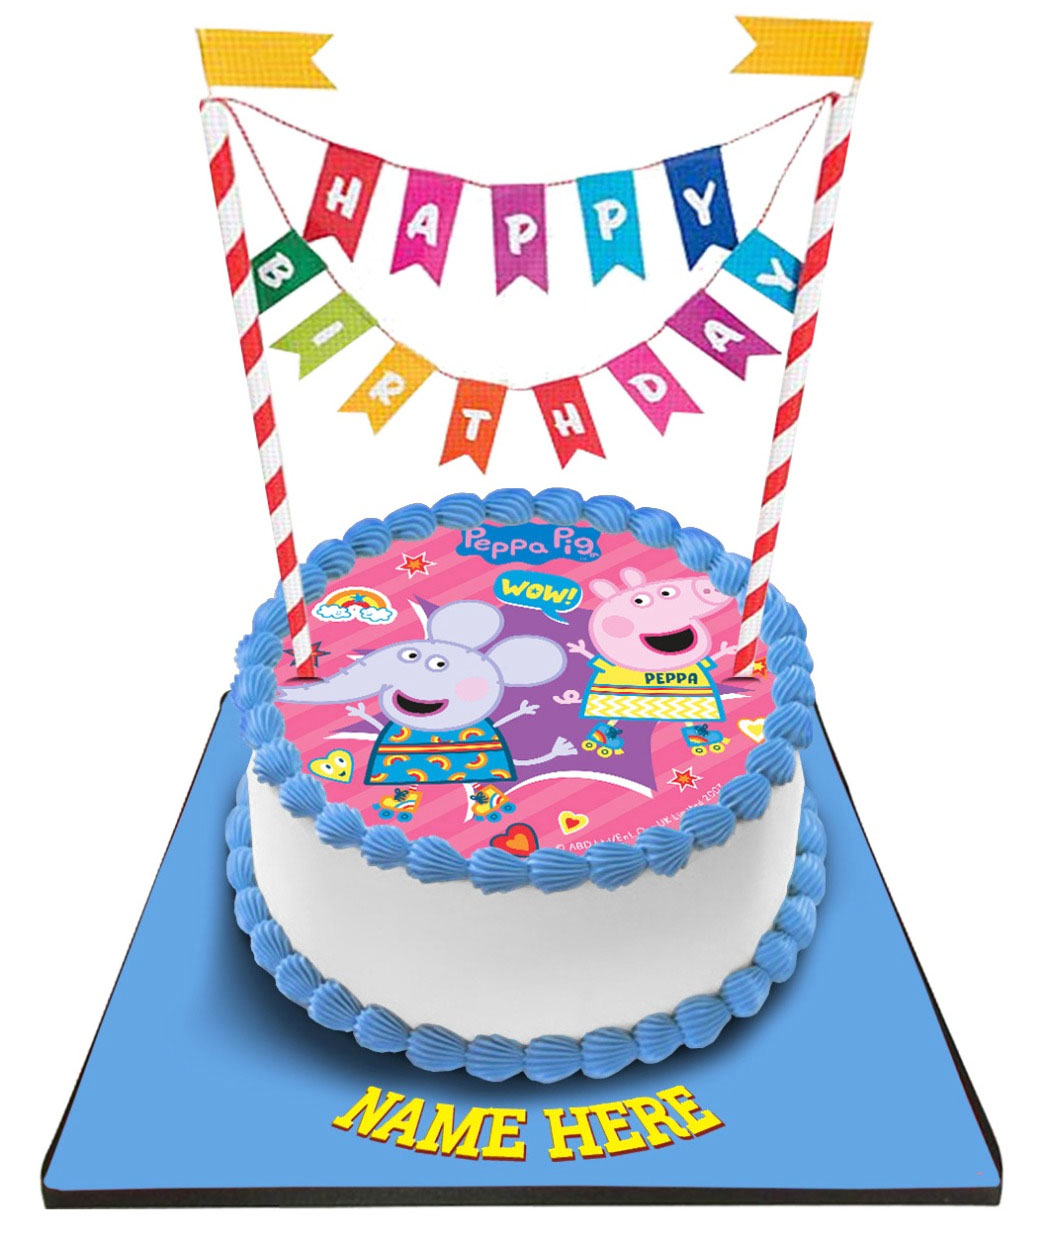 Peppa Pig Cake with Happy Birthday Bunting